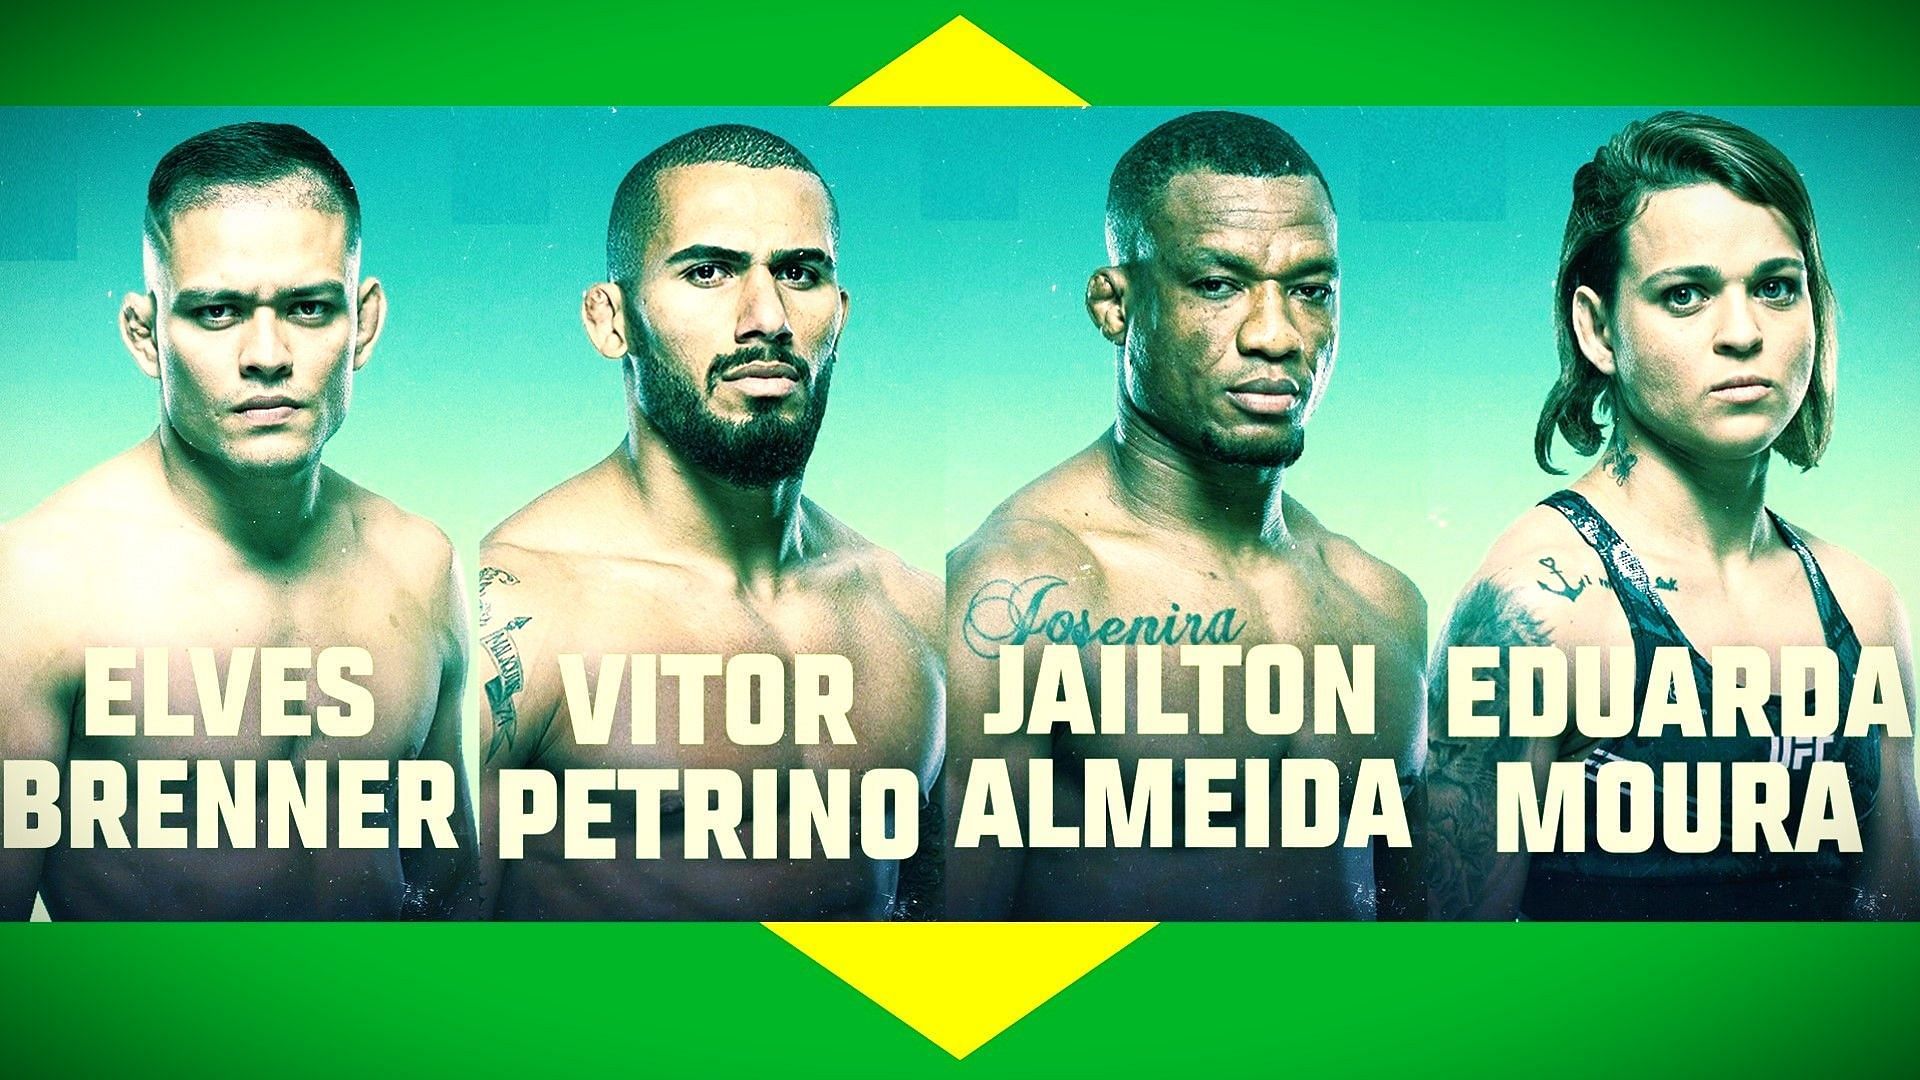 UFC Brazil winners [Images via @ufc_brasil on Instagram]